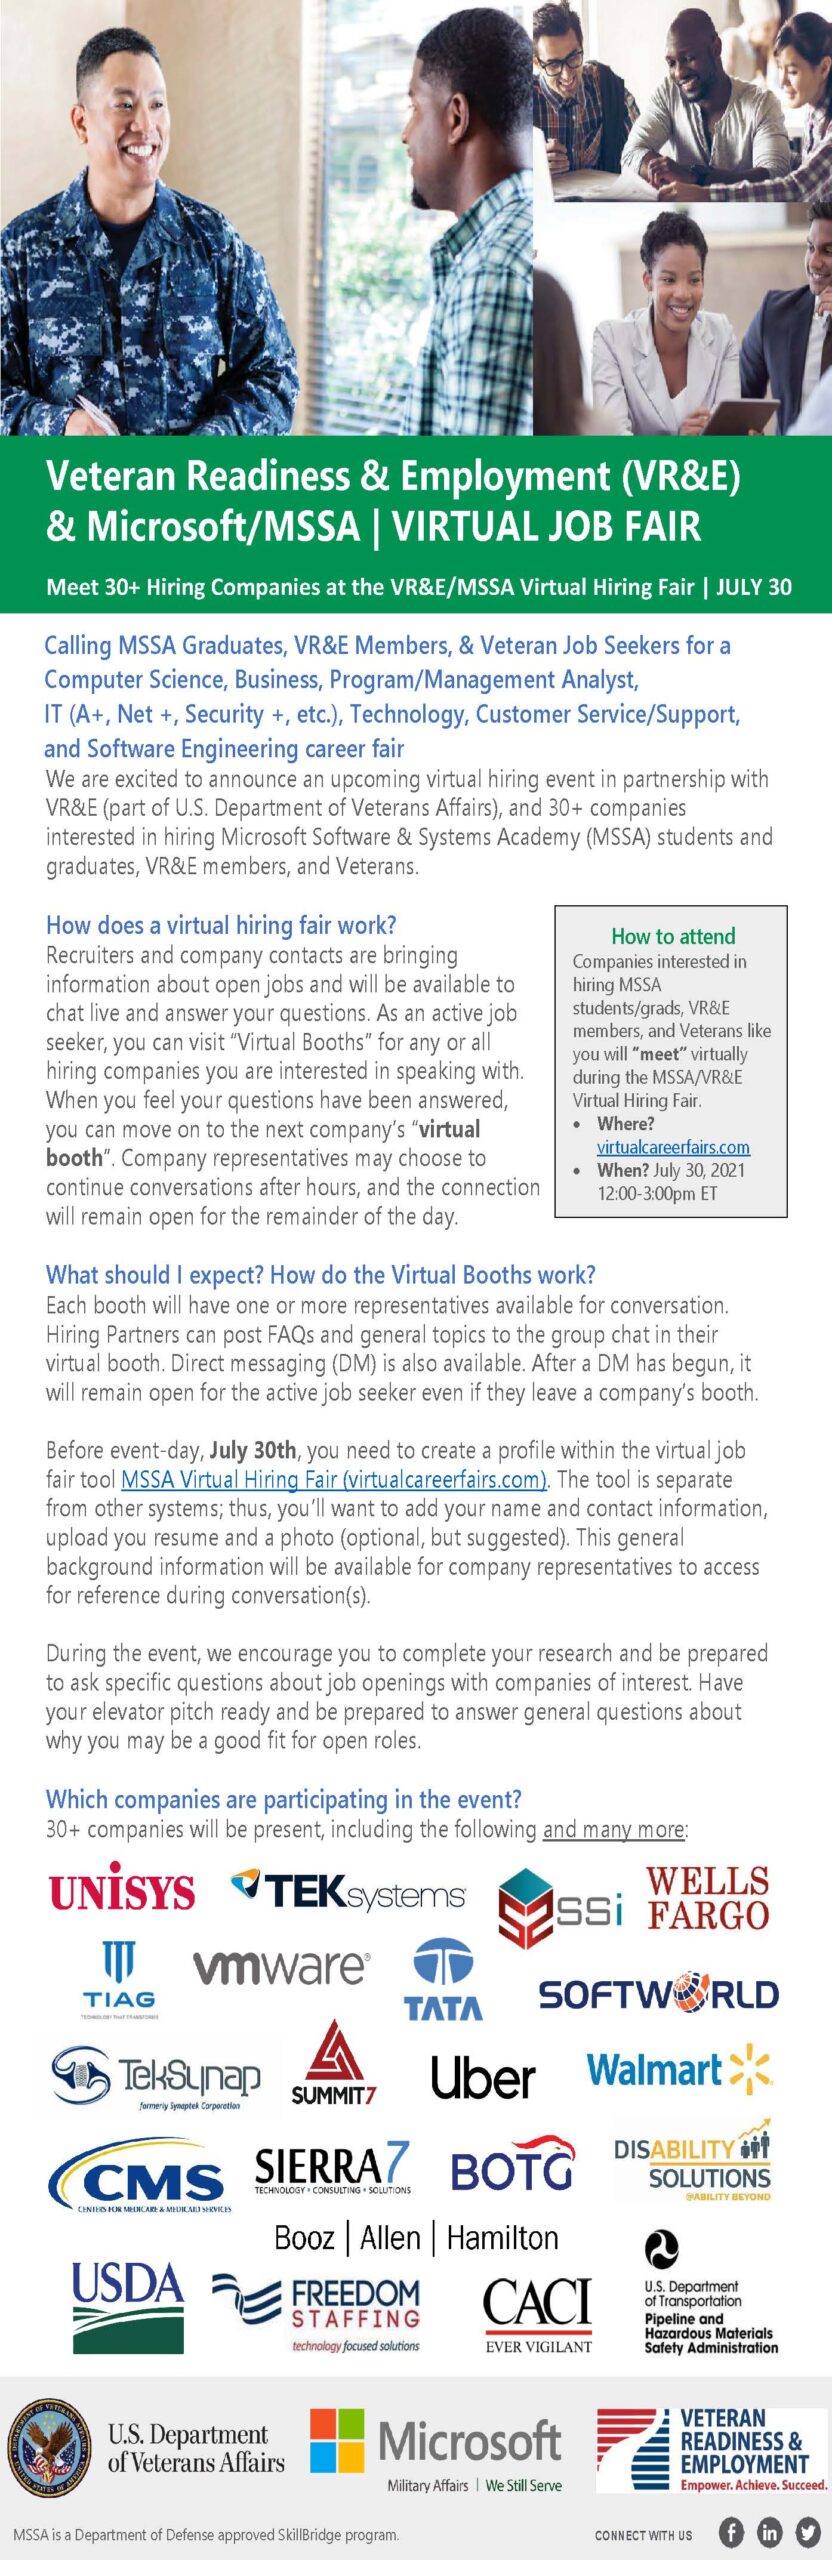 VR&E & MSSA Virtual Job Fair Alabama Department of Veterans Affairs